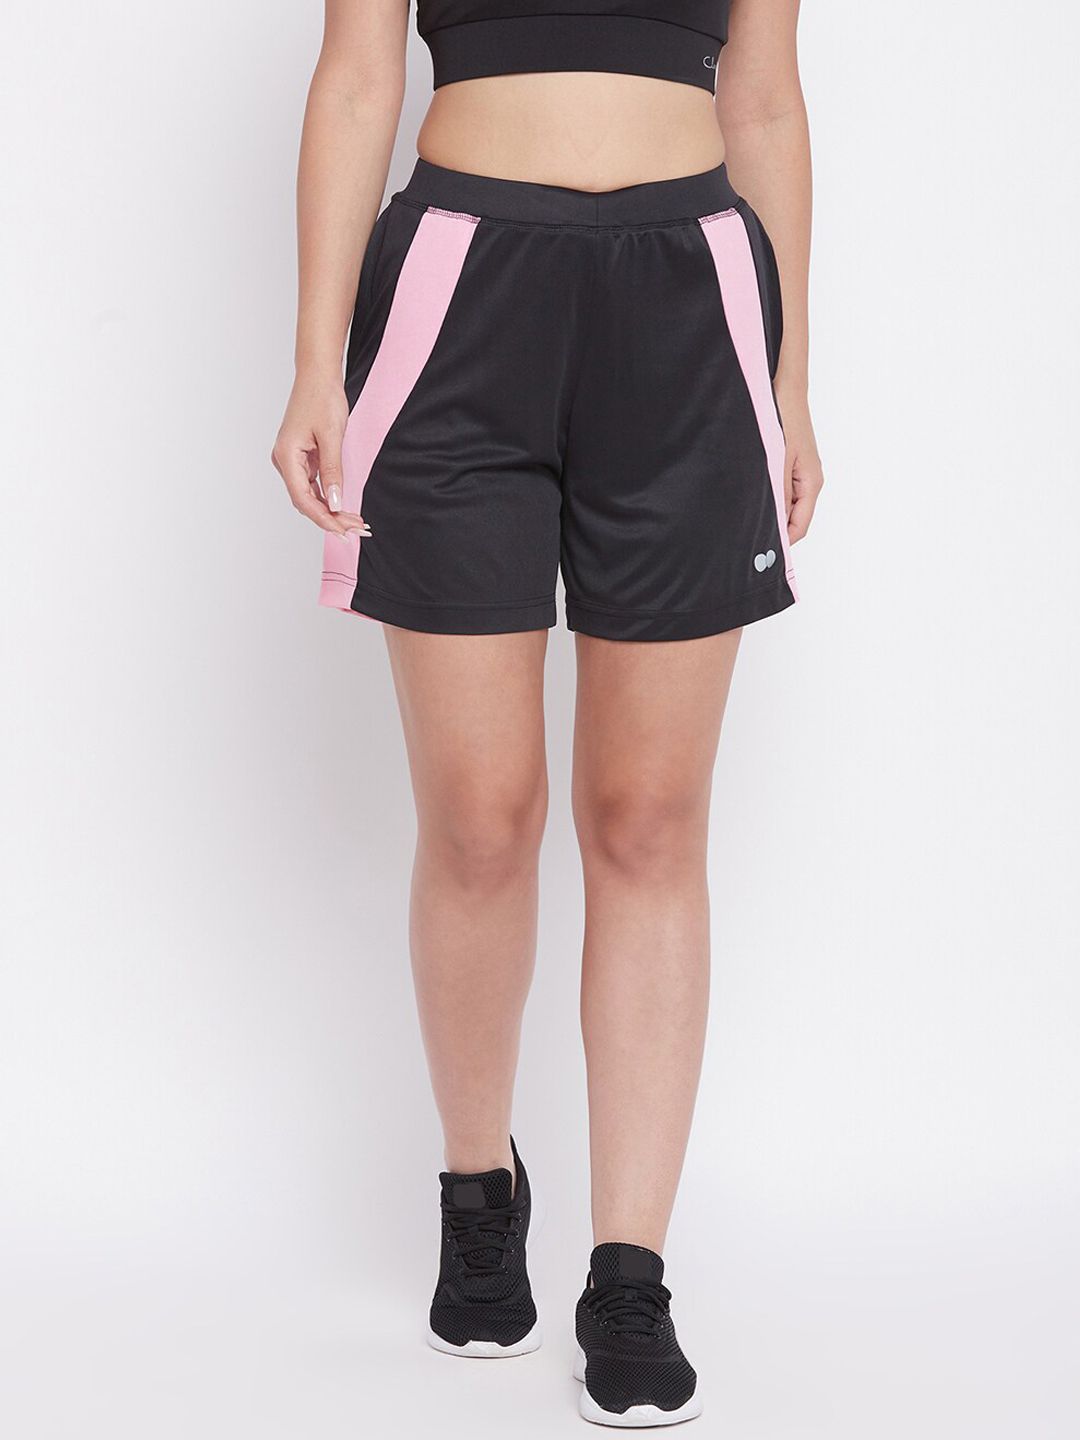 Clovia Women Black & Pink Training or Gym Shorts Price in India